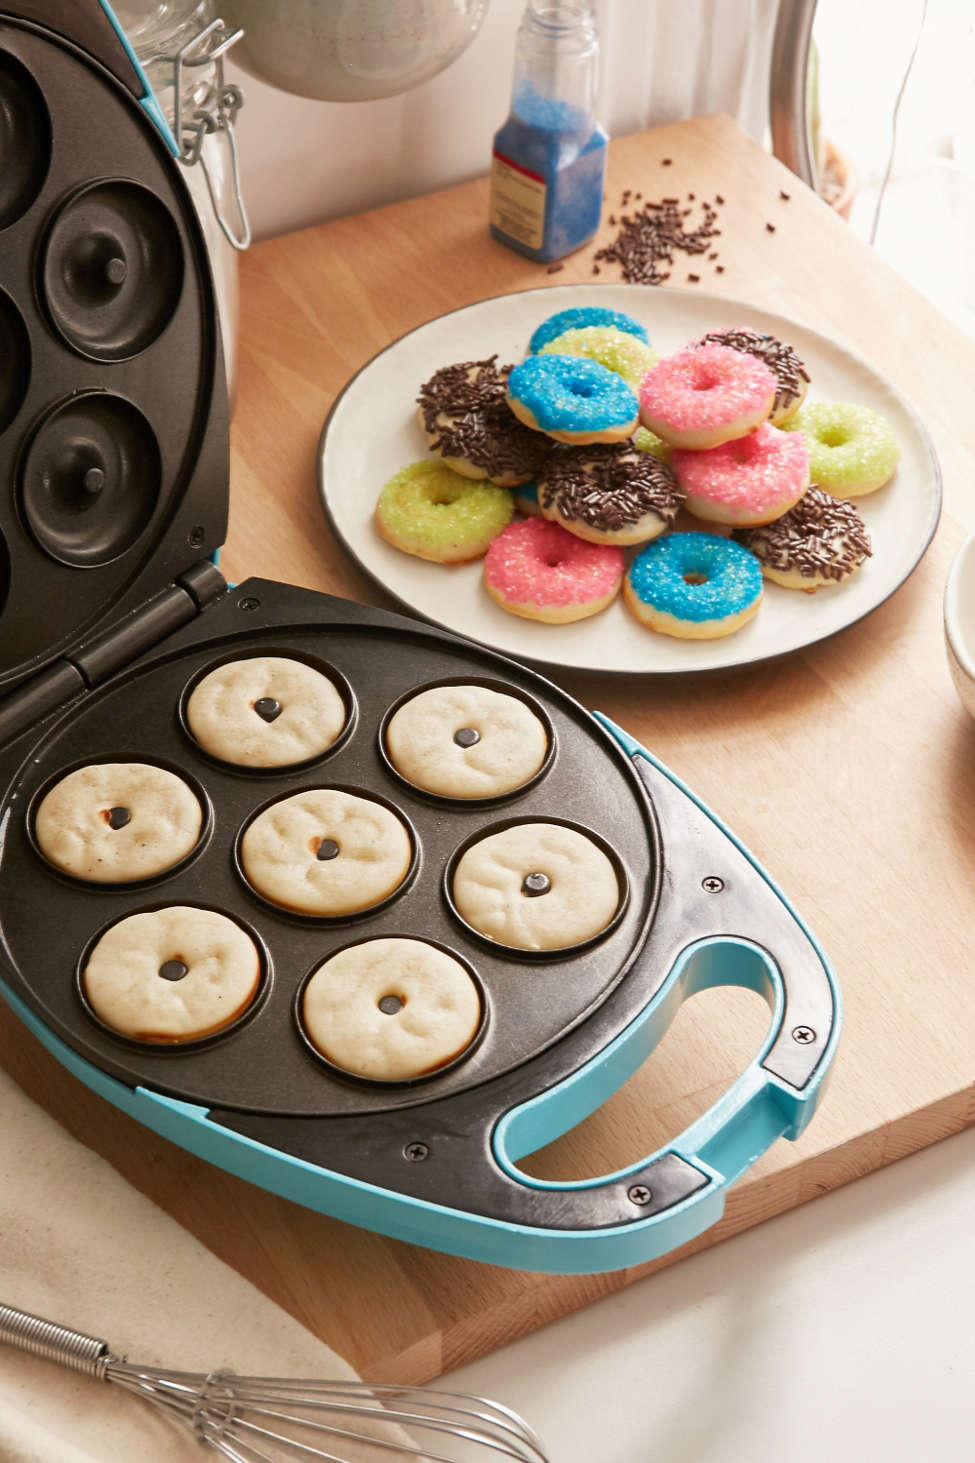 Mini donut maker